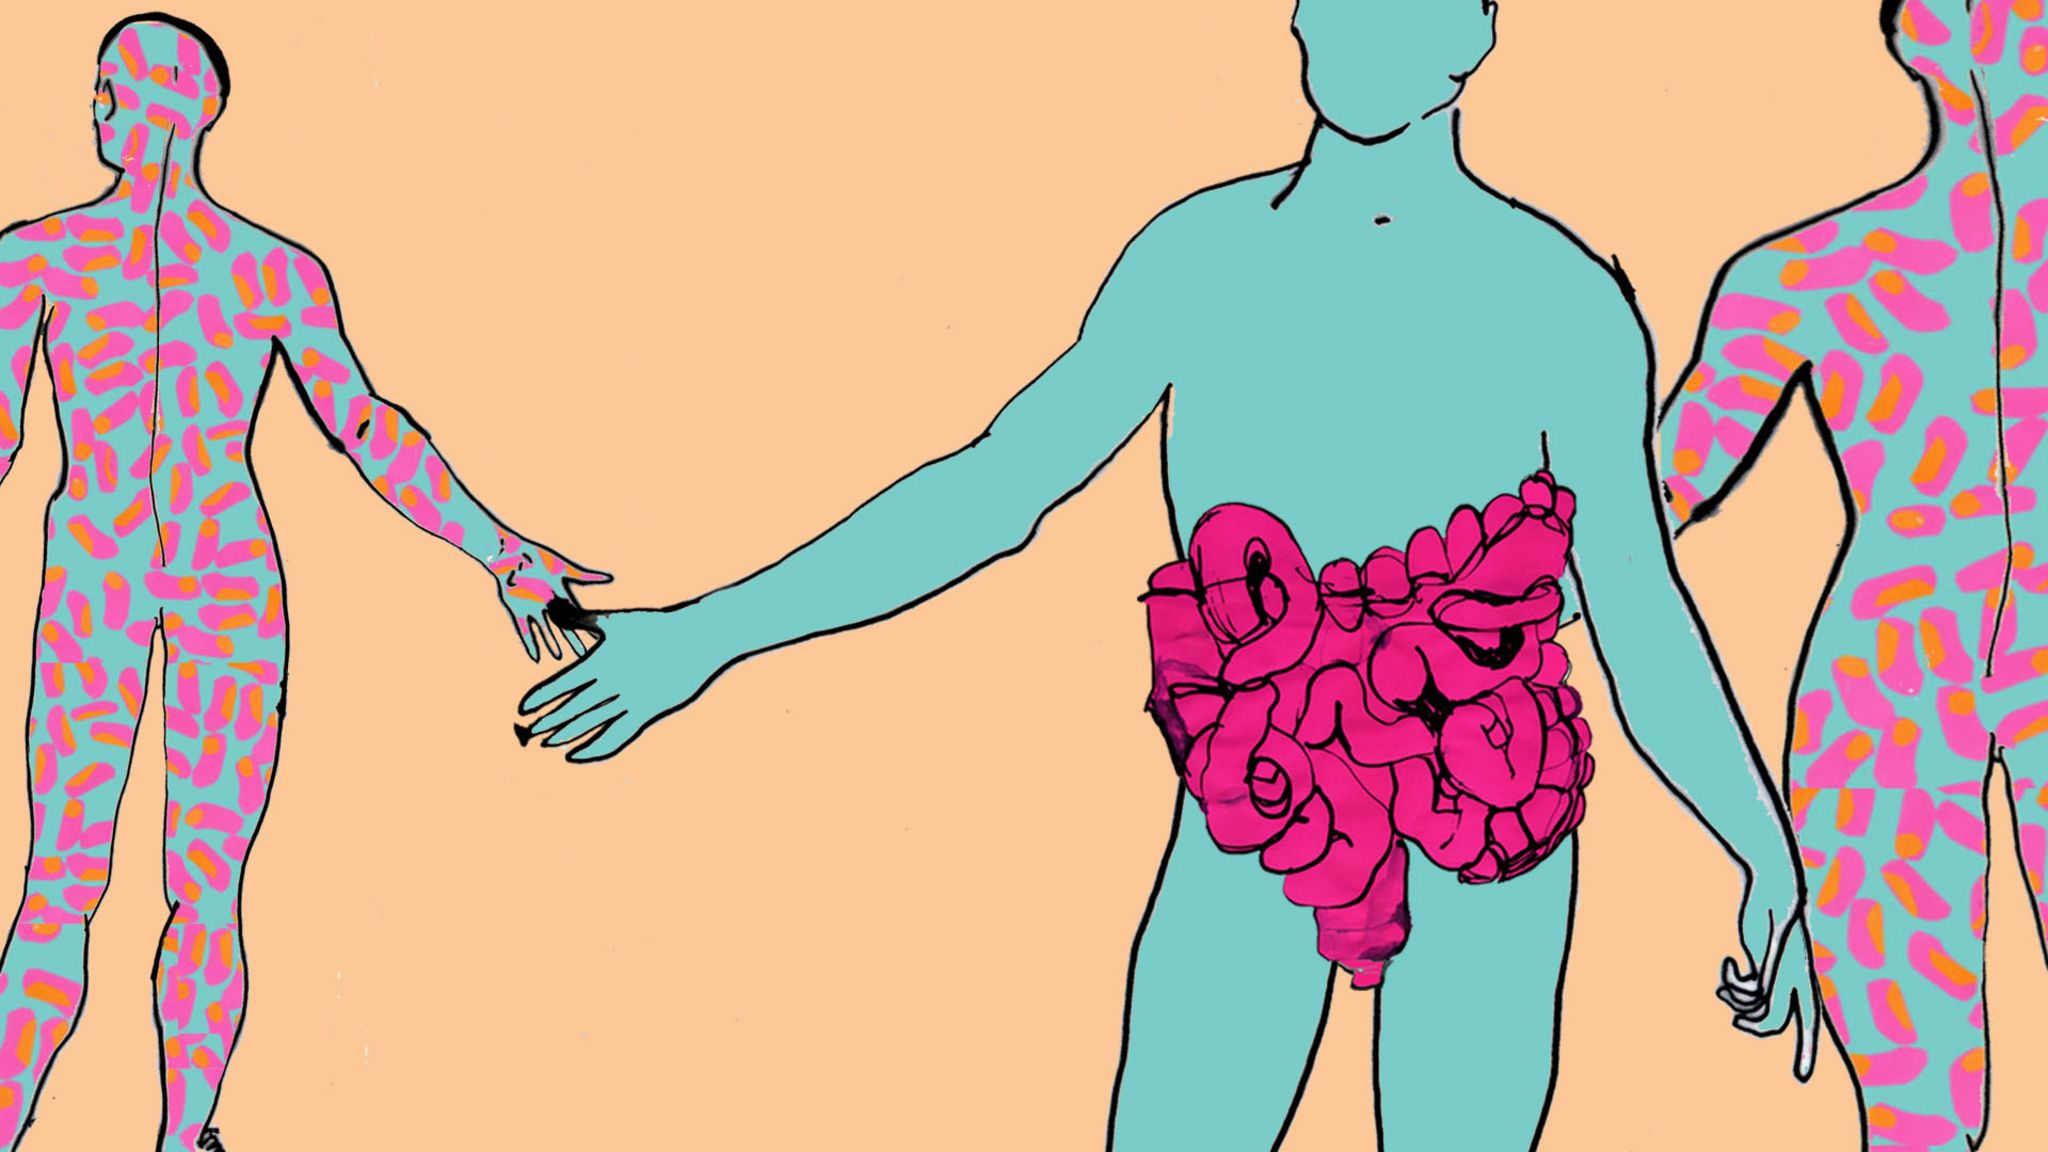 Poo transplant illustration